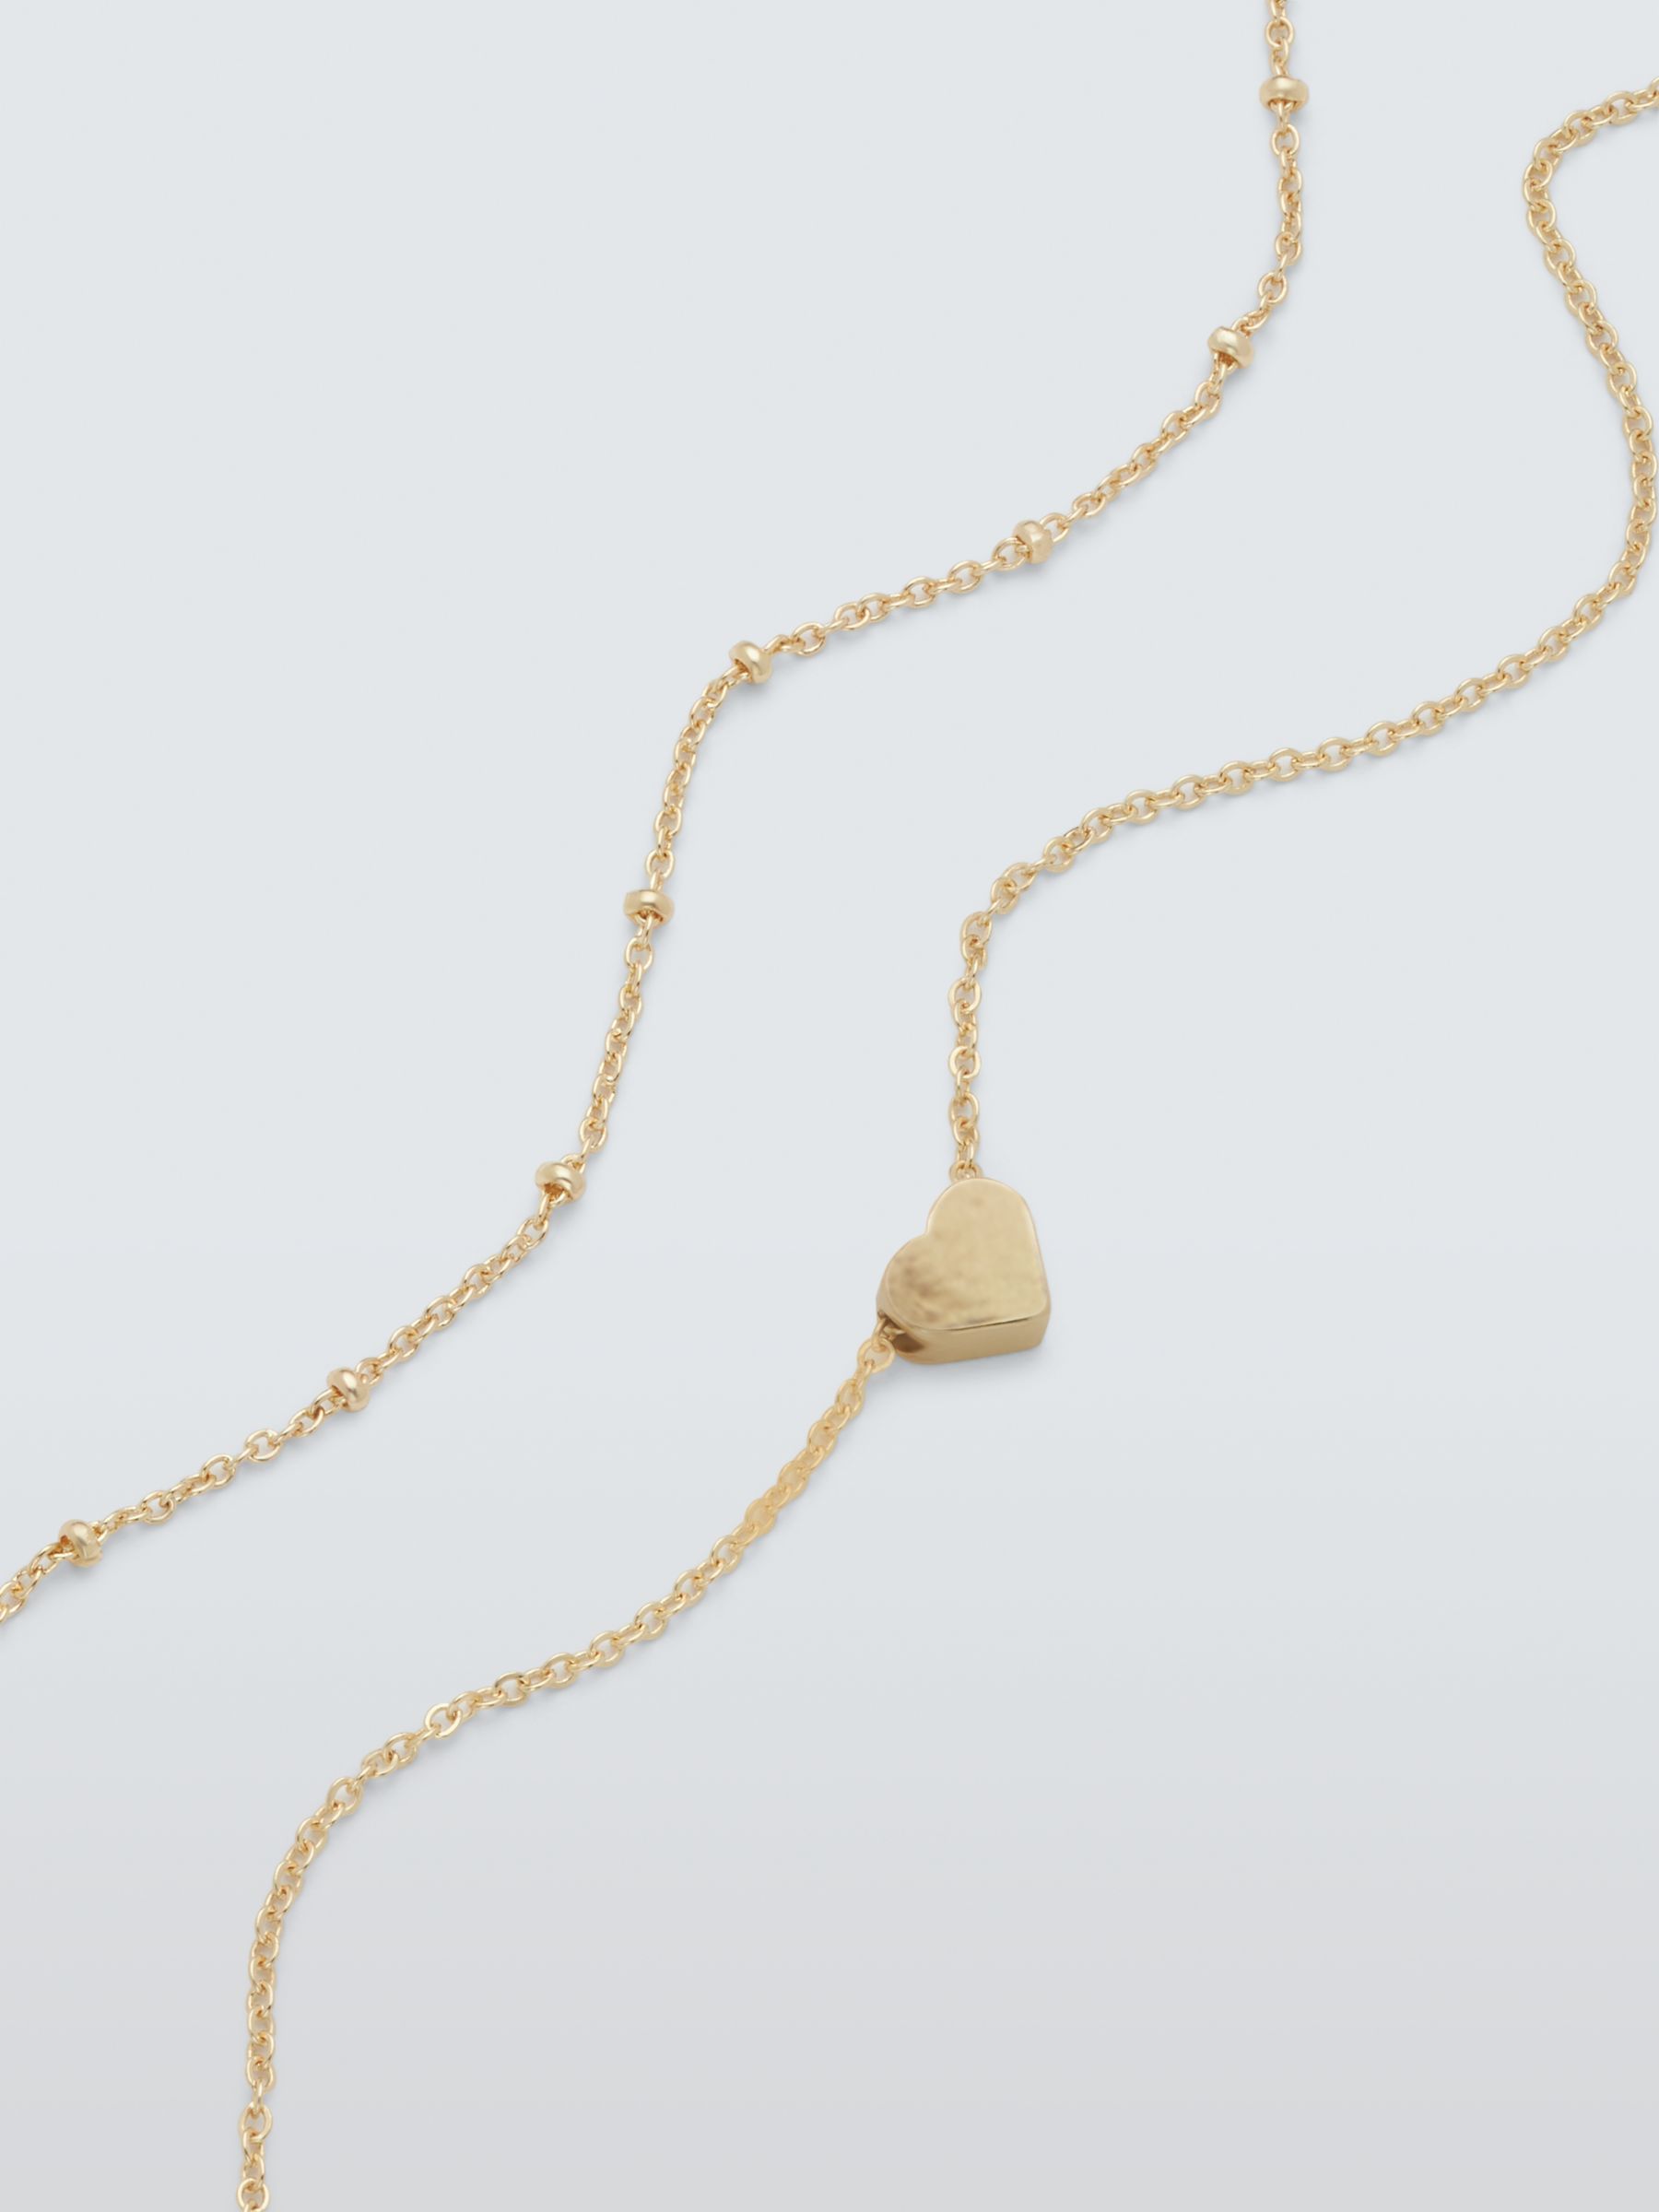 Buy John Lewis Heart Bead Chain Bracelet, Pack of 2 Online at johnlewis.com